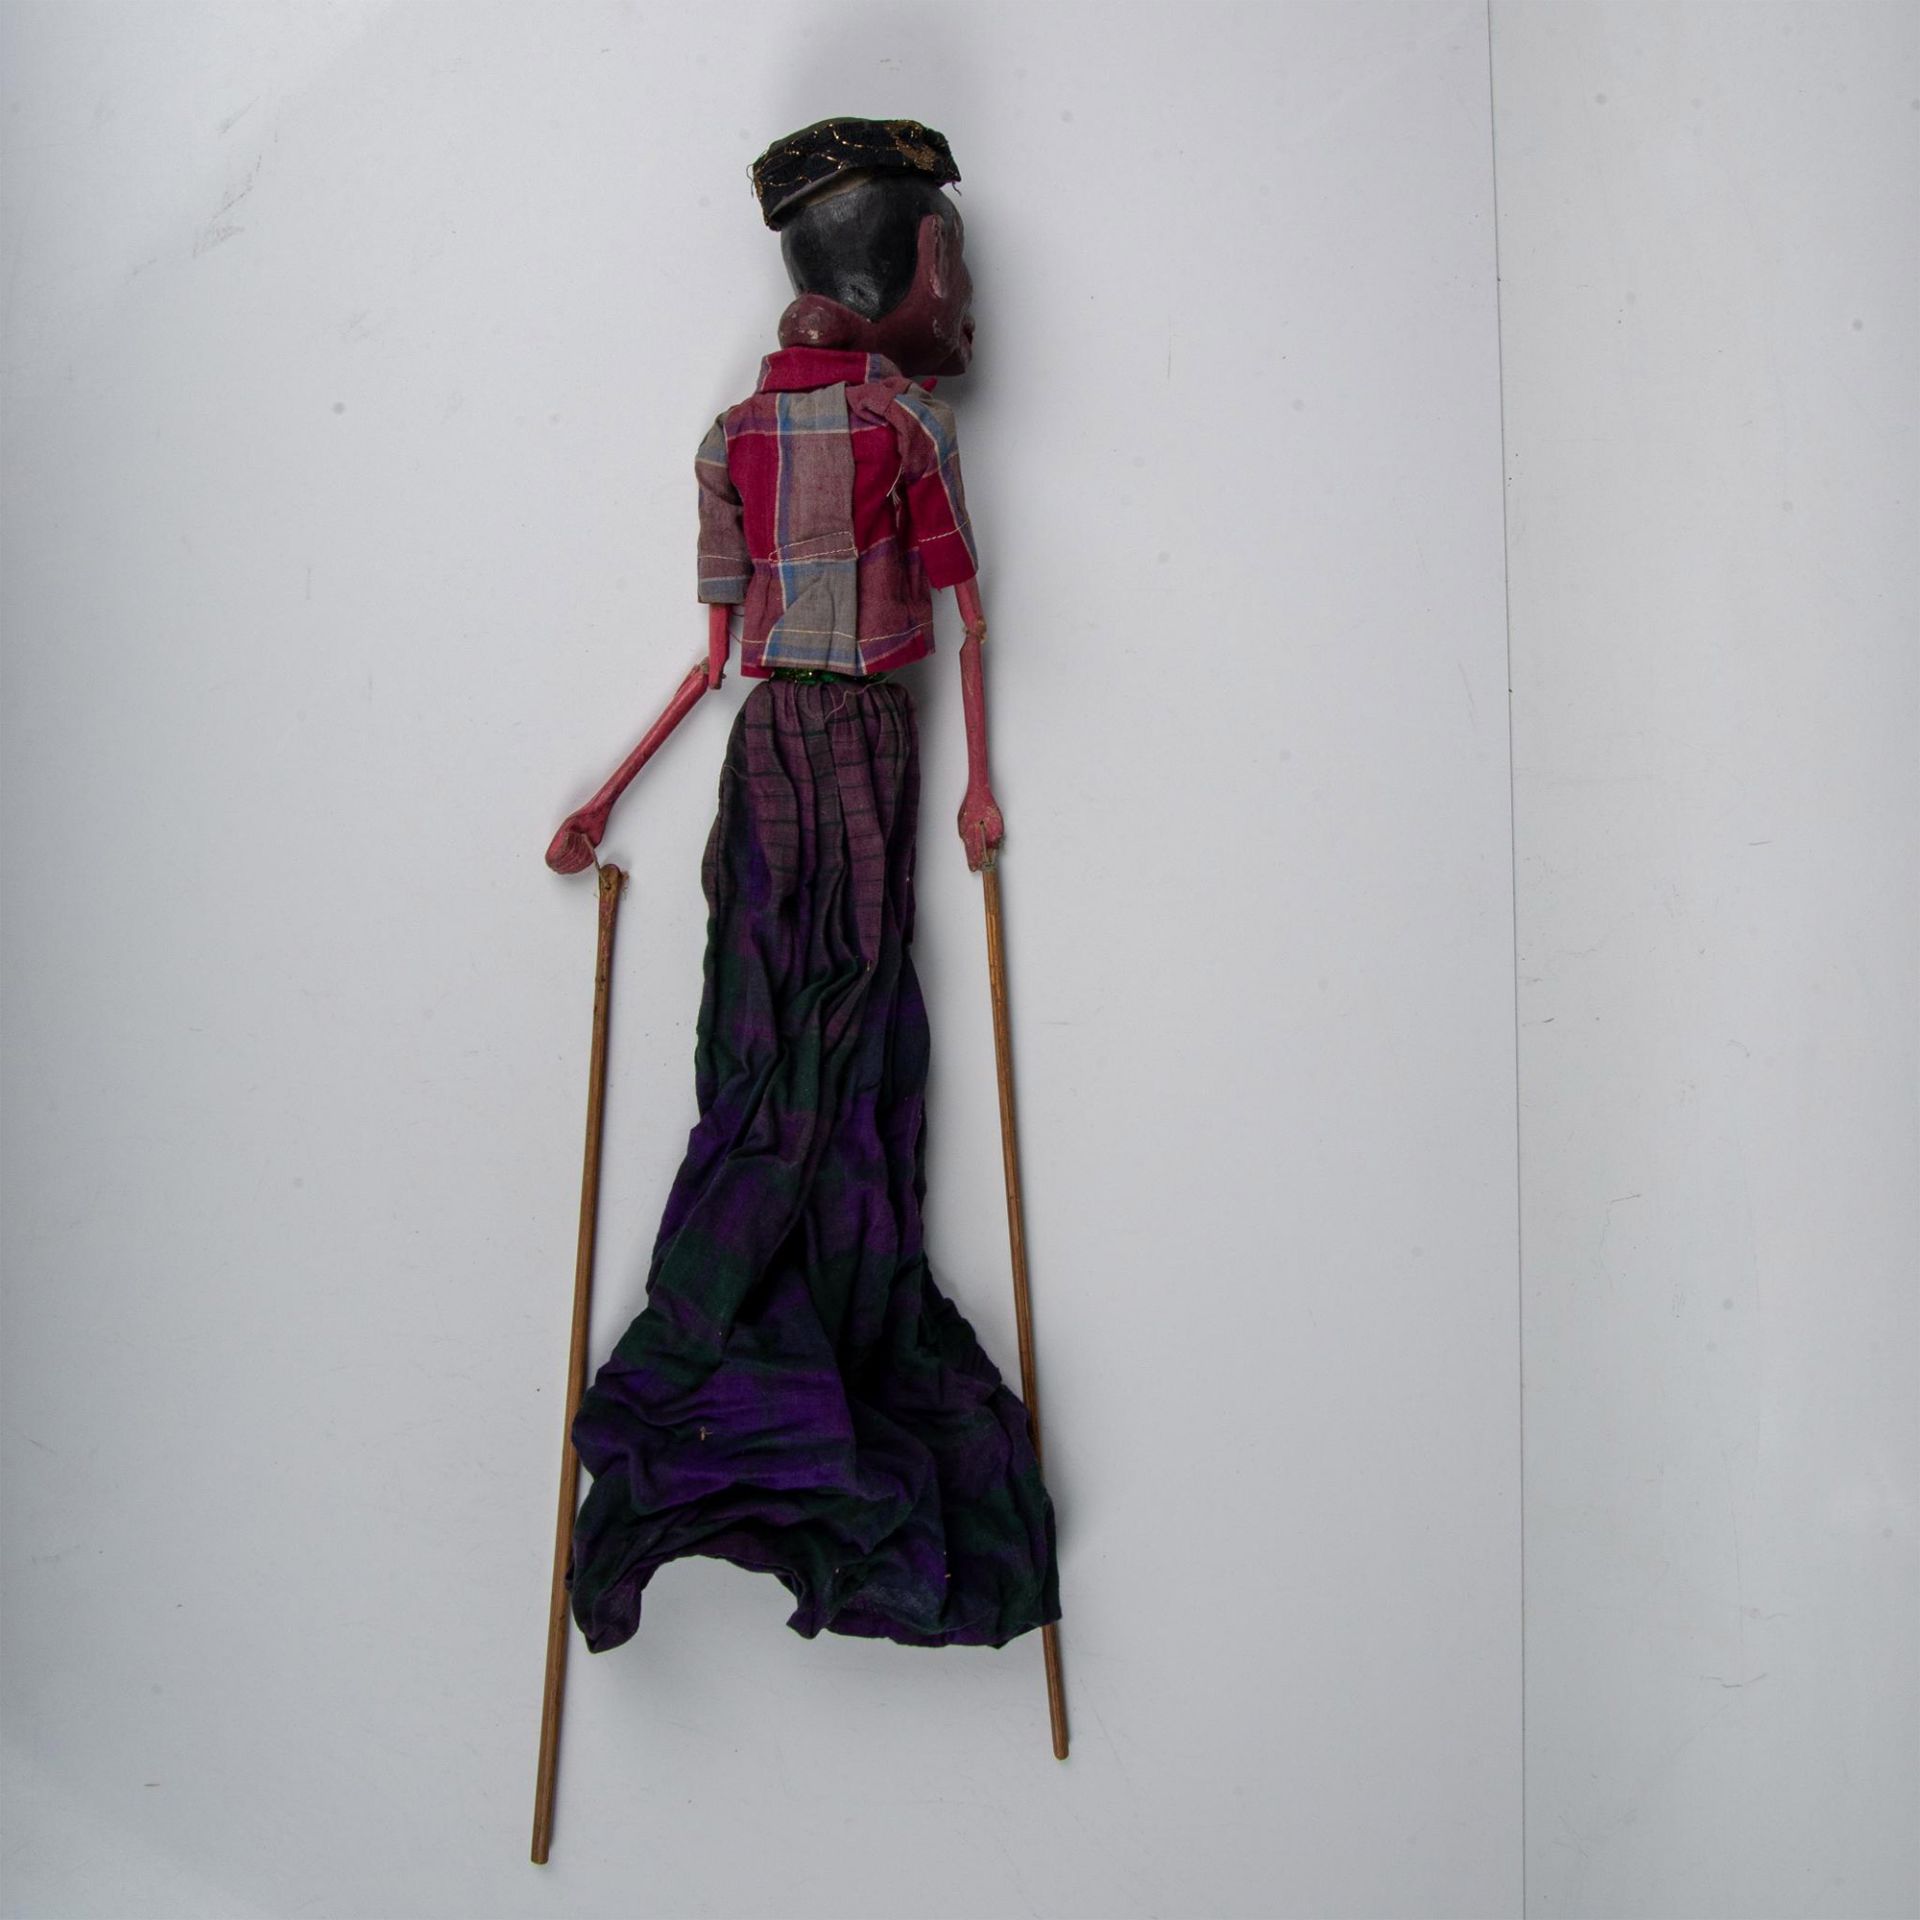 Indonesian Wayang Golek Menak Theater Puppet - Image 4 of 4